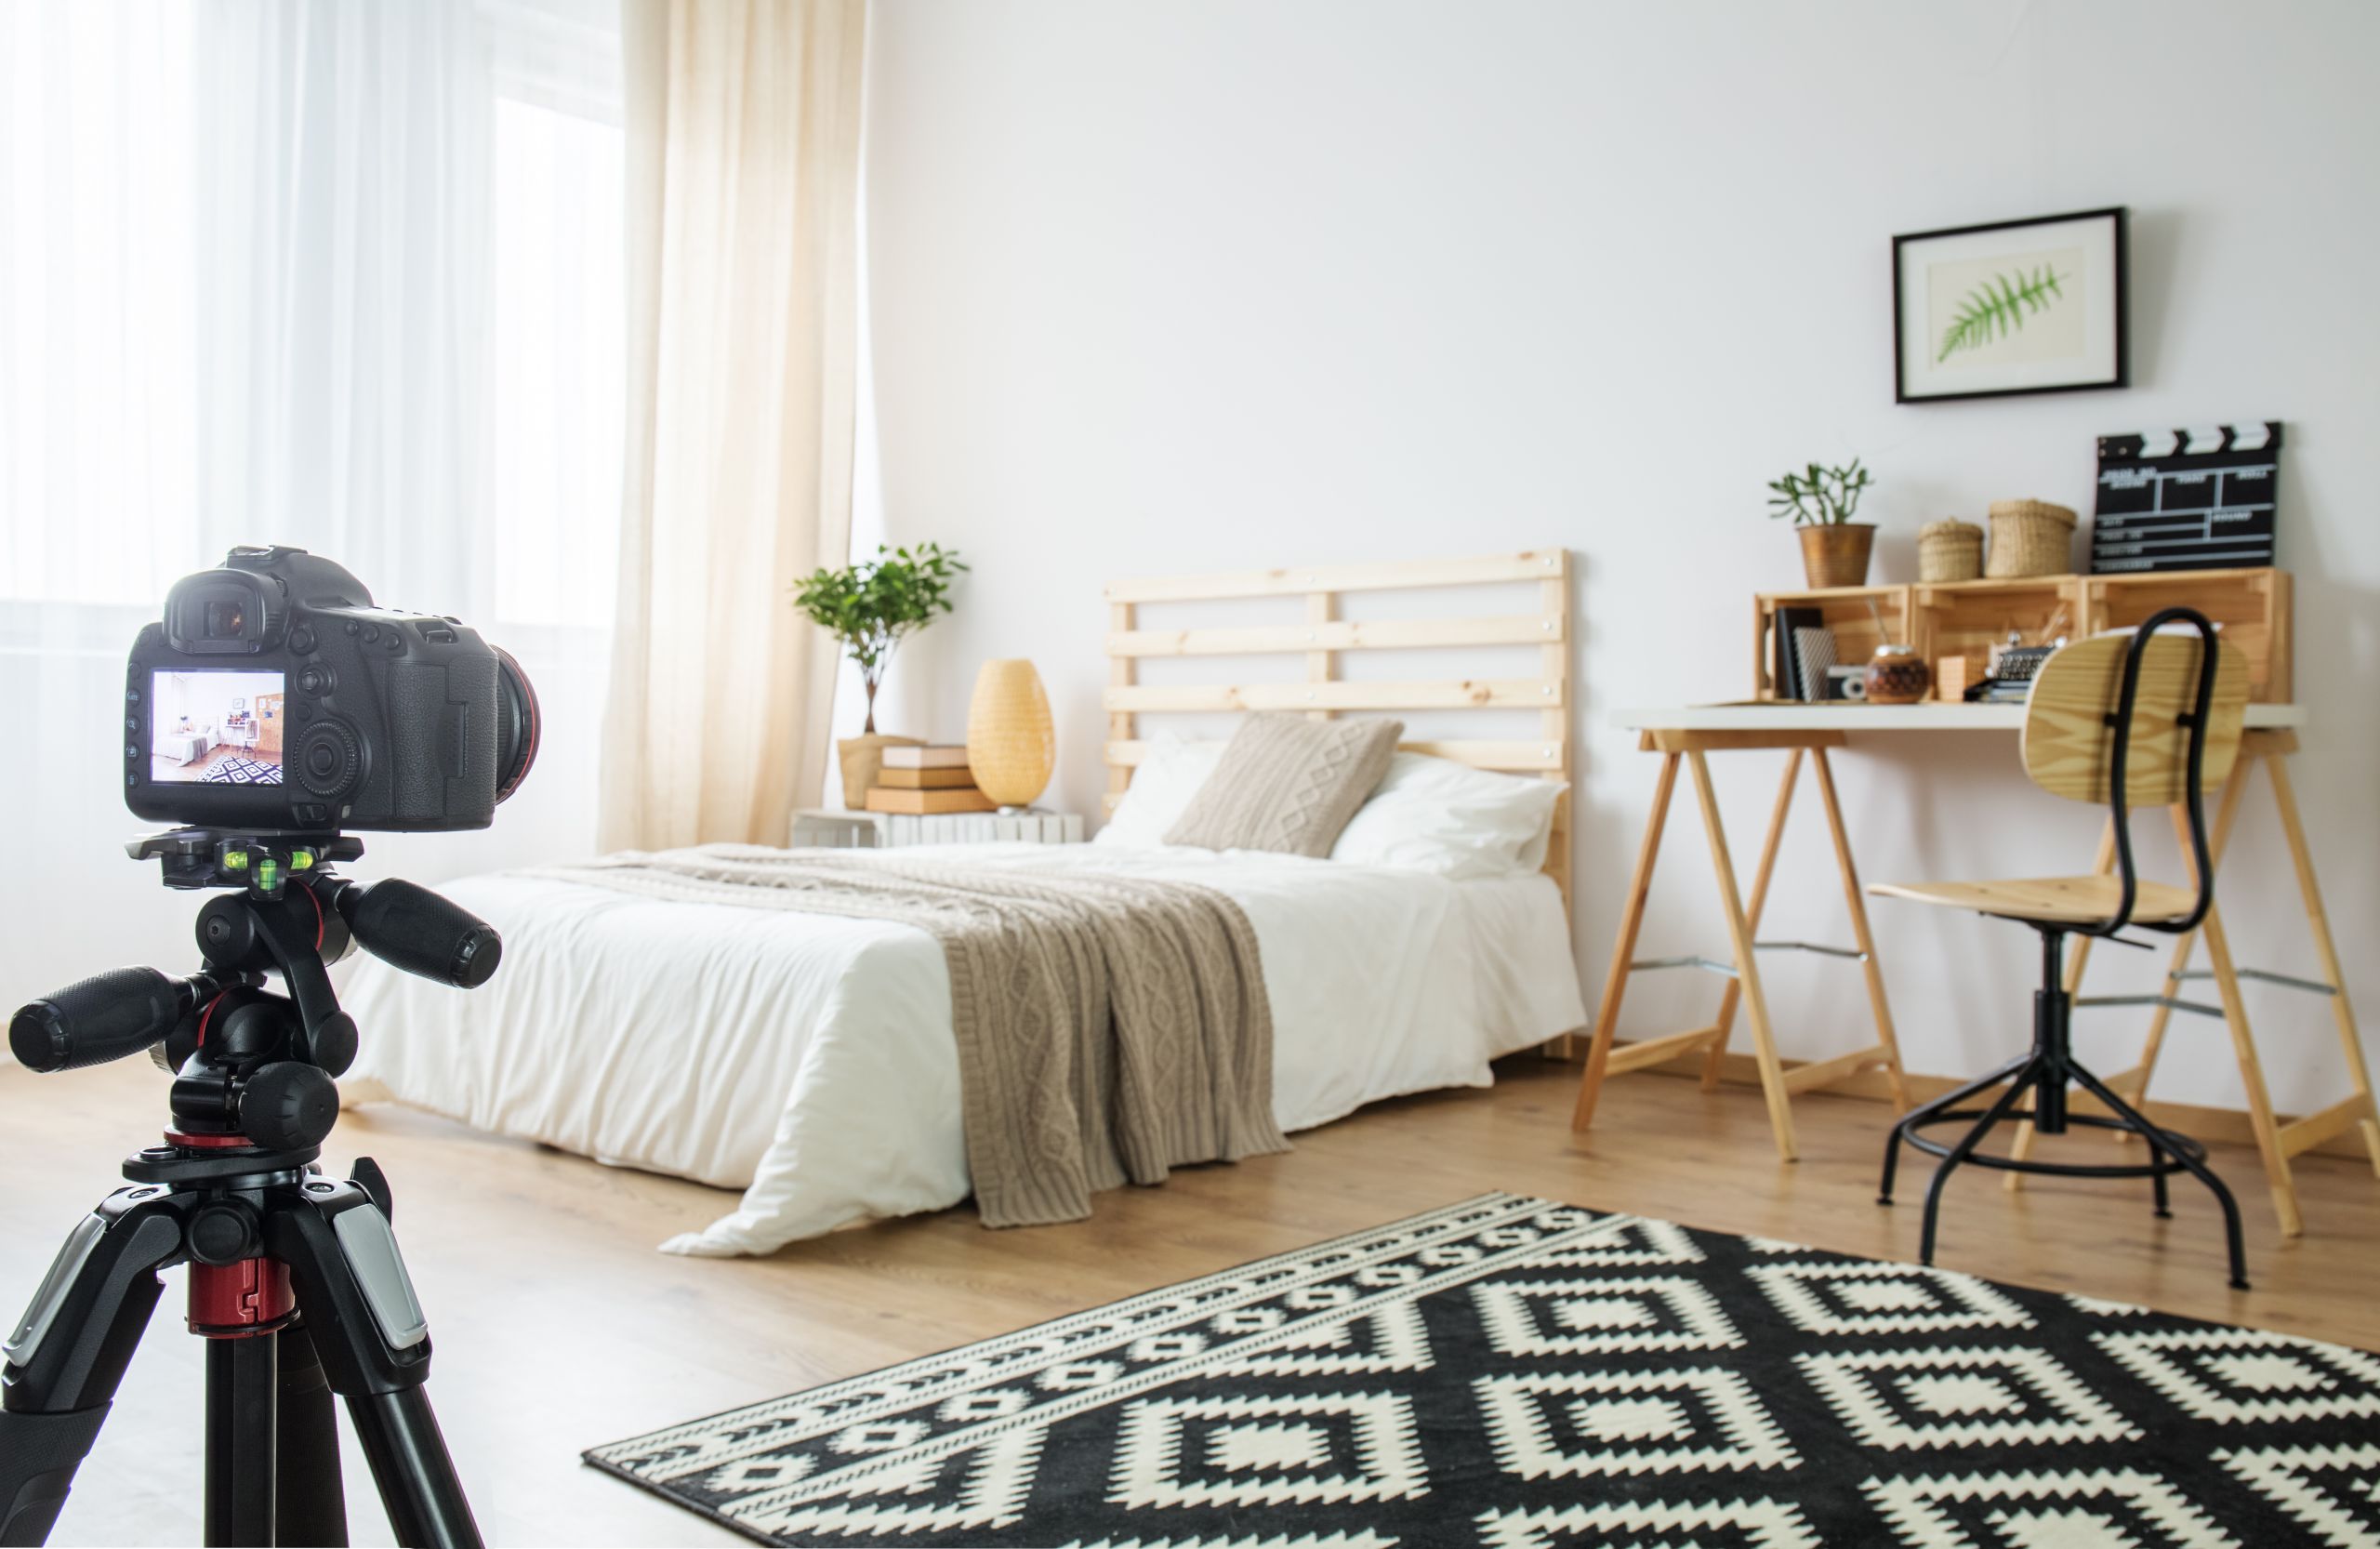 Camera on a tripod in modern bedroom interior